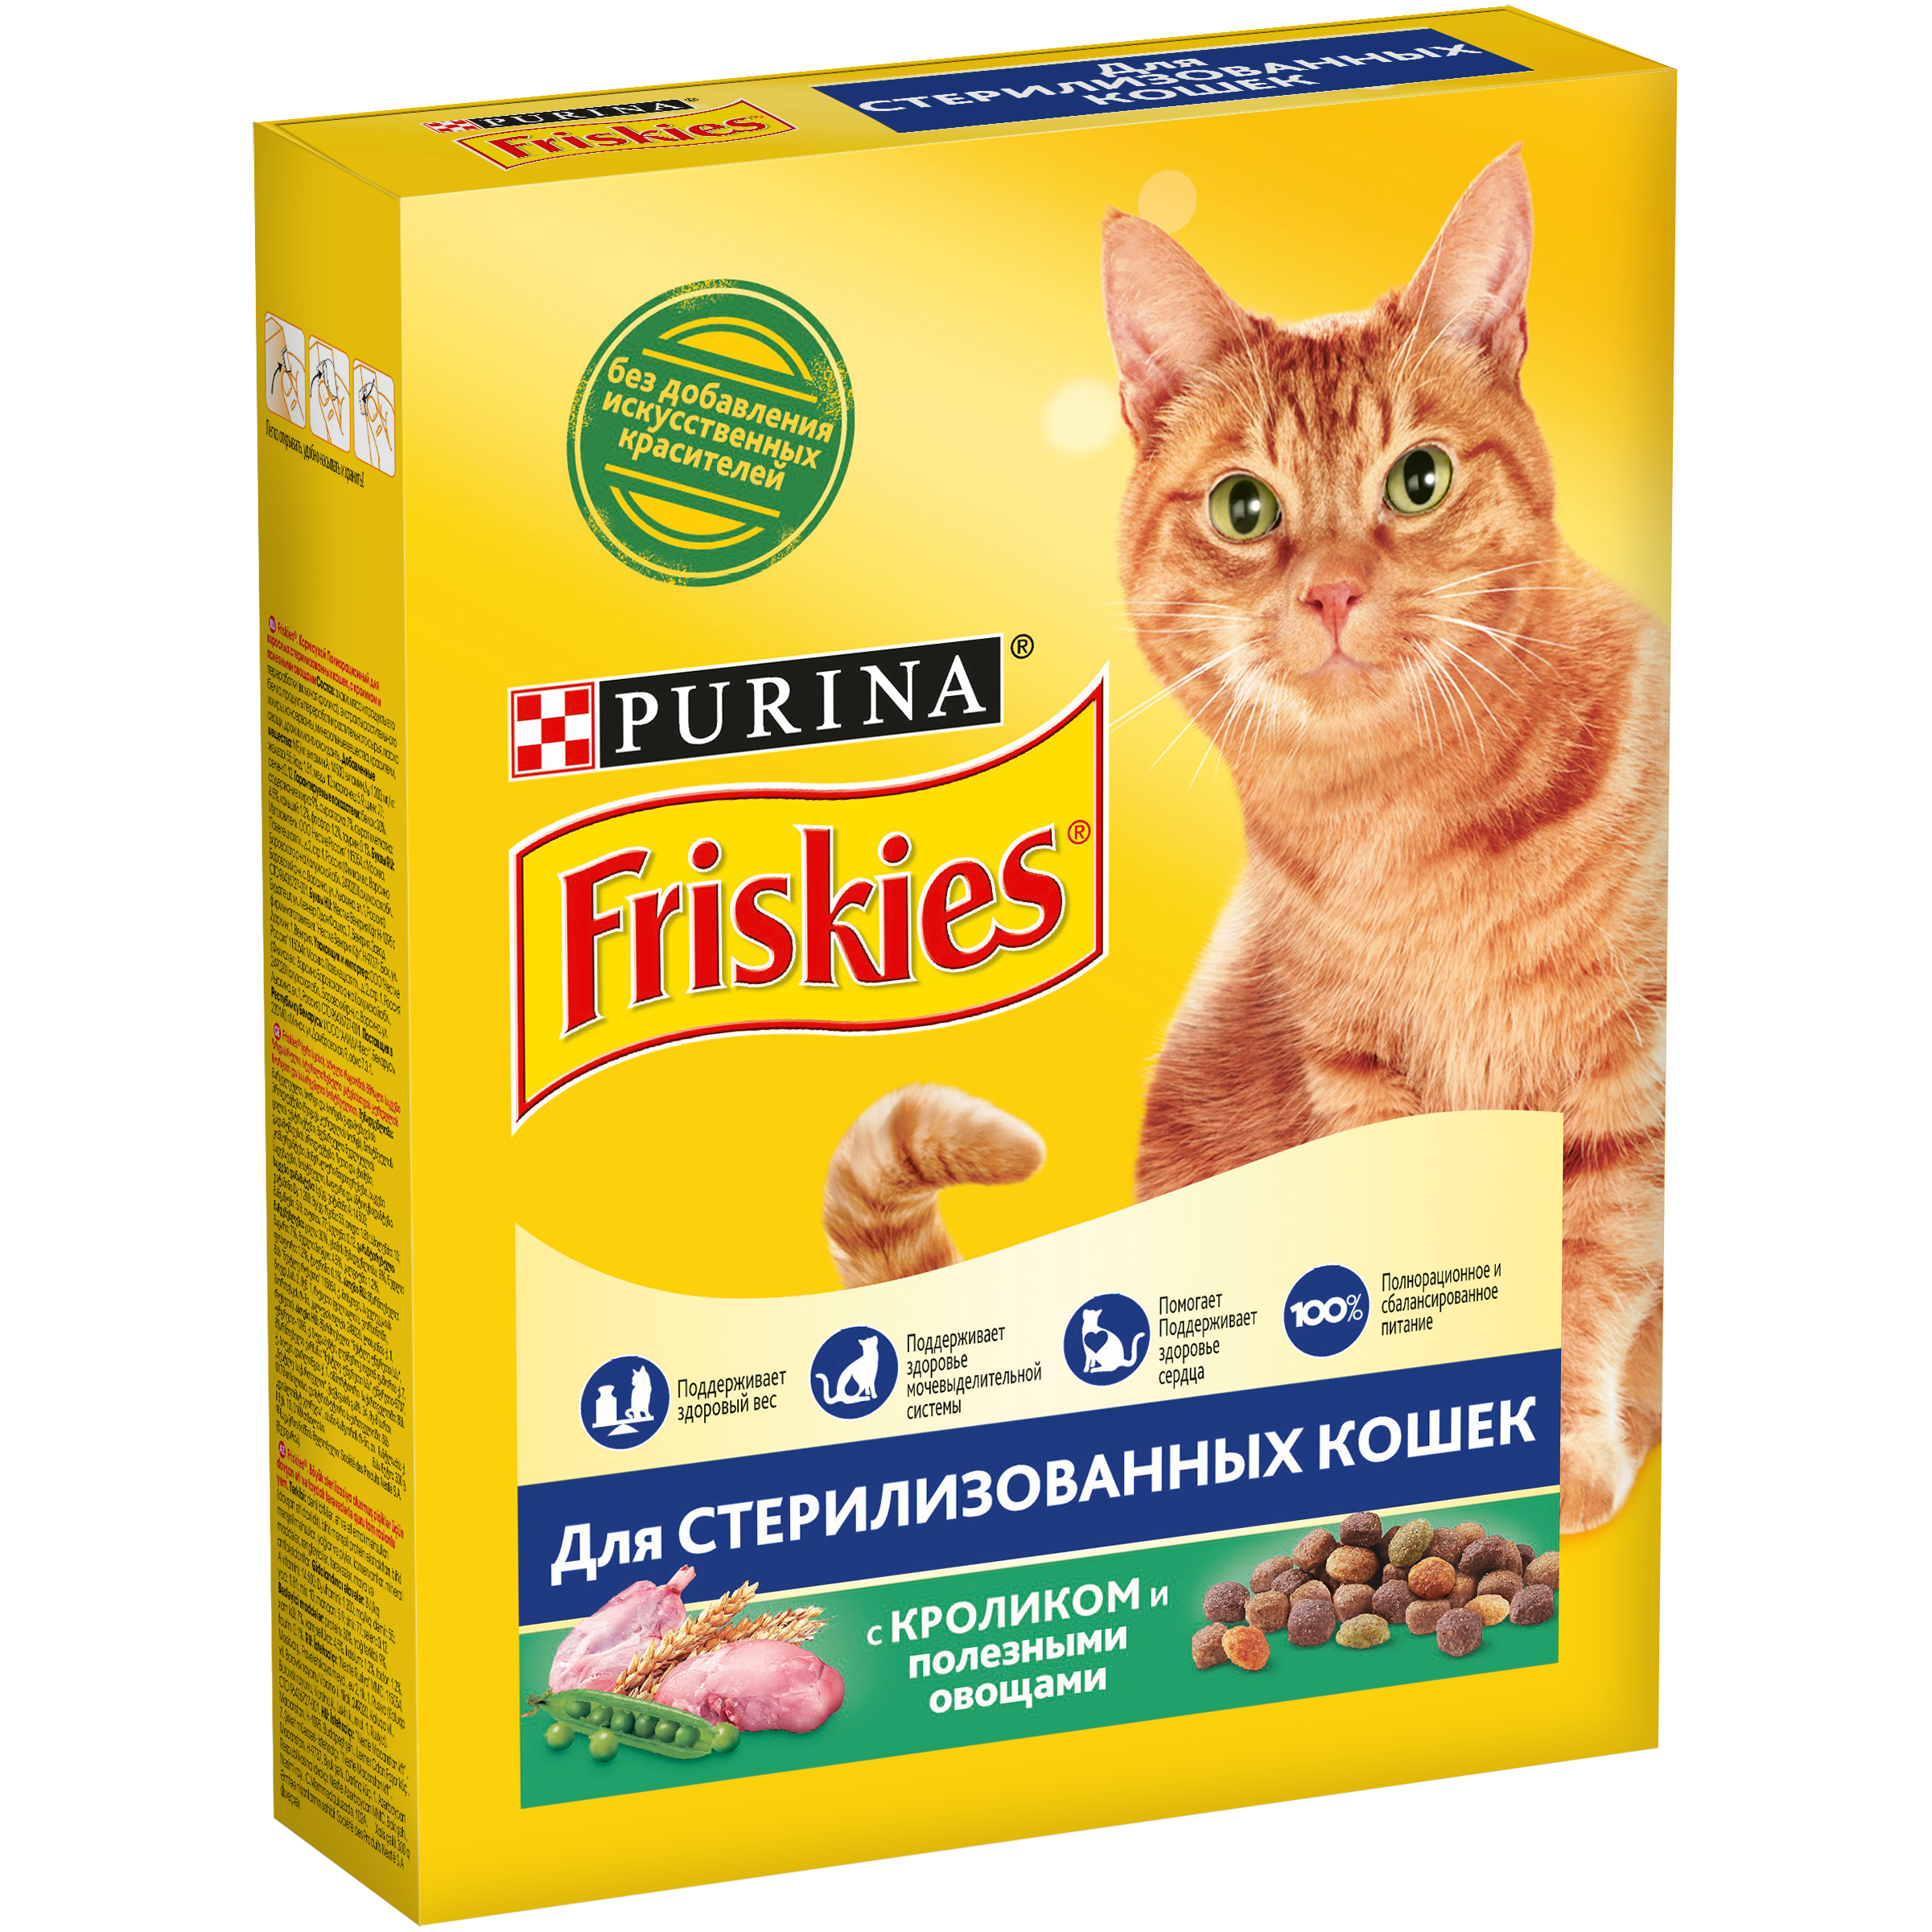 Купить корм для кошек в спб дешево. Фрискис корм для кошек сухой для стерилизованных. Корм для стерилизованных кошек friskies. Корм сухой для кошек friskies для стерилизованных кошек. Фрискис для стерилизованных кошек.